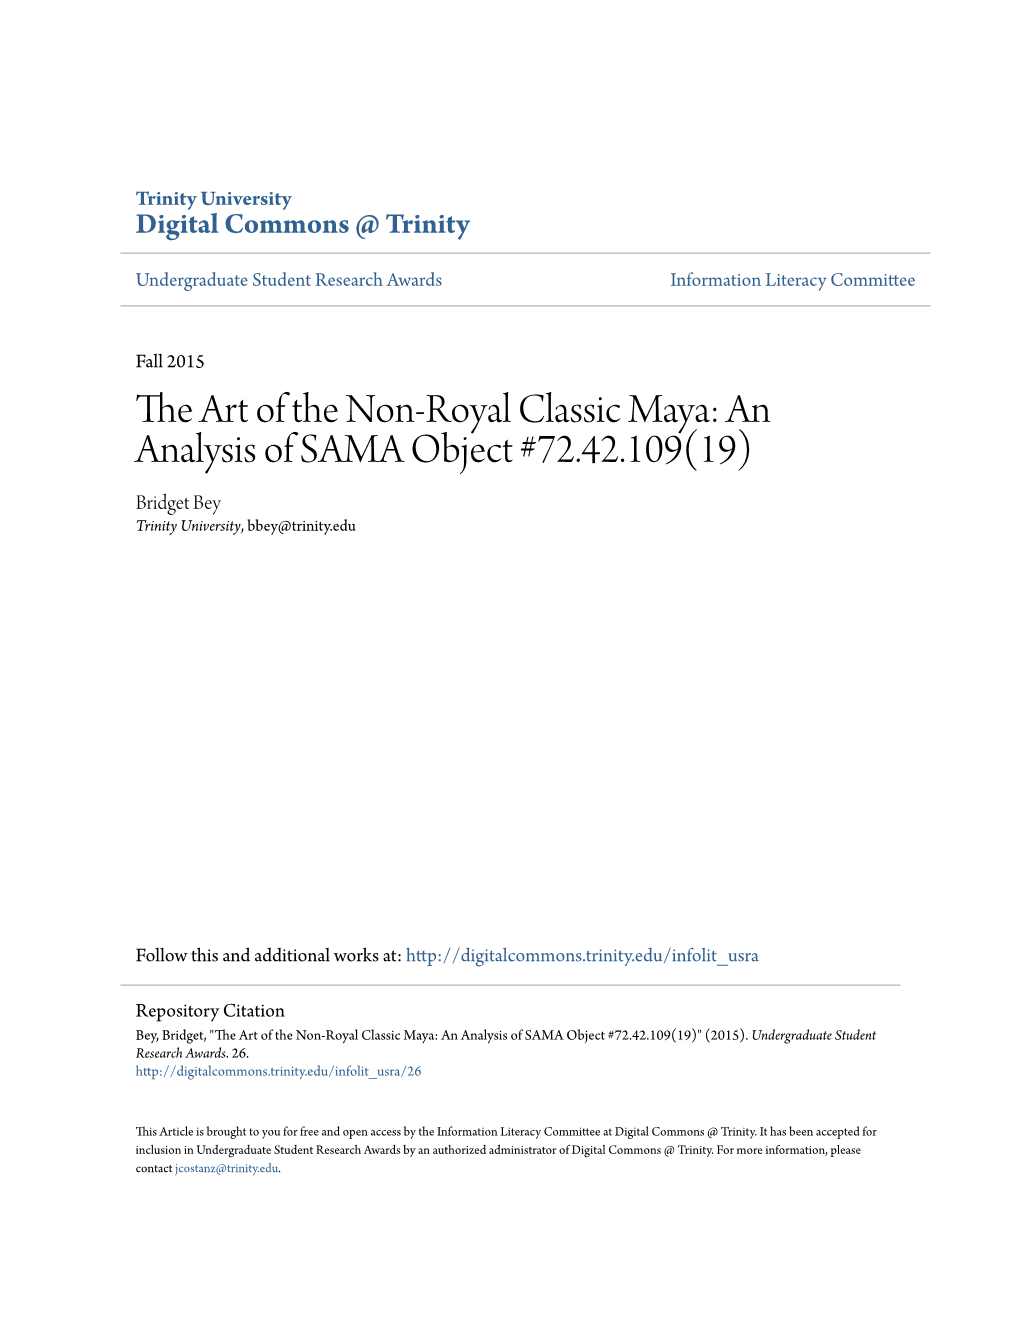 The Art of the Non-Royal Classic Maya: an Analysis of SAMA Object #72.42.109(19) Bridget Bey Trinity University, Bbey@Trinity.Edu